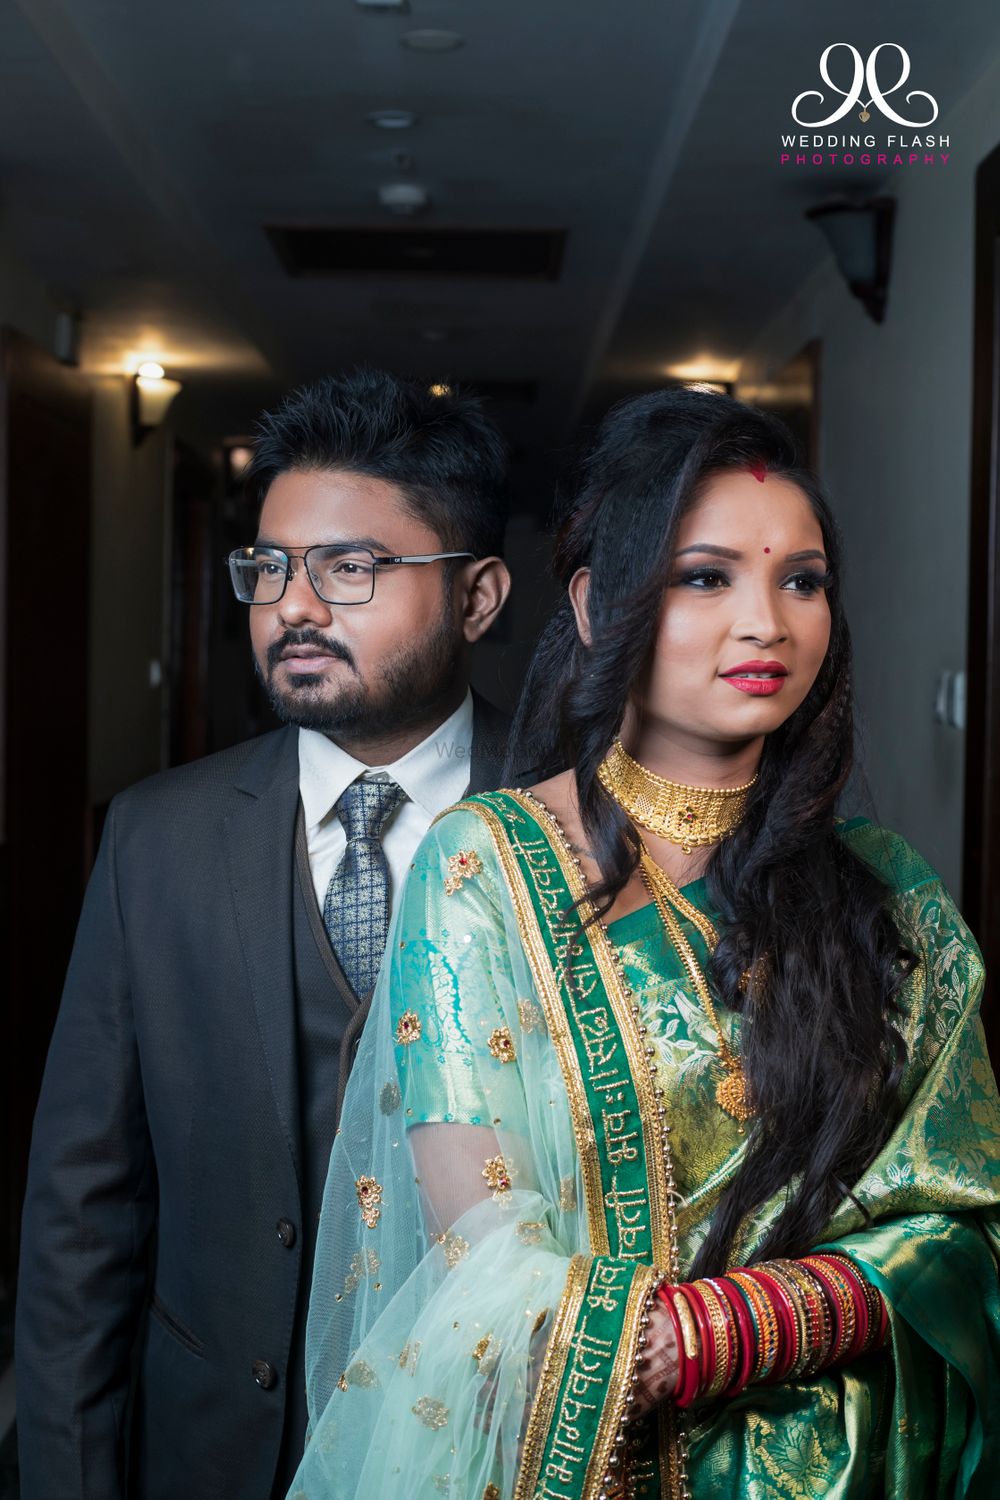 Photo From Sonali Anubhab - By Wedding Flash